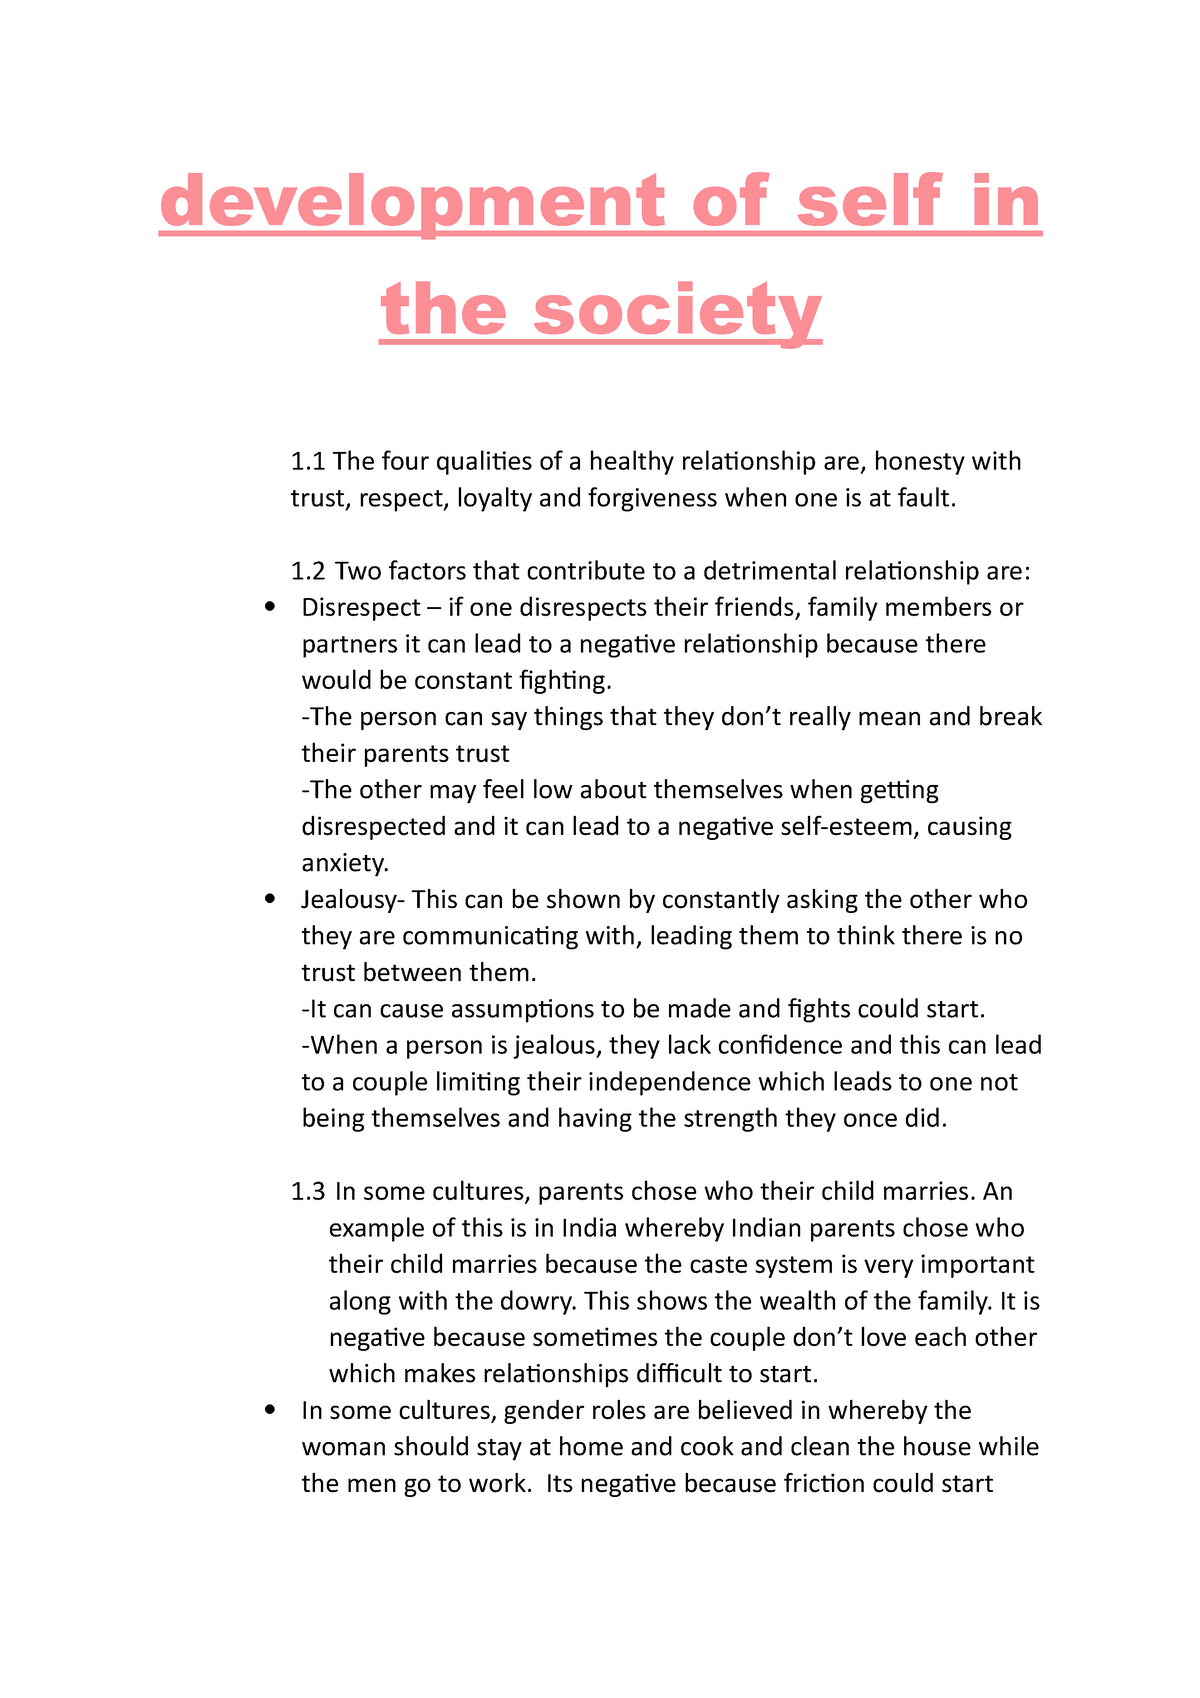 development of self in society essay